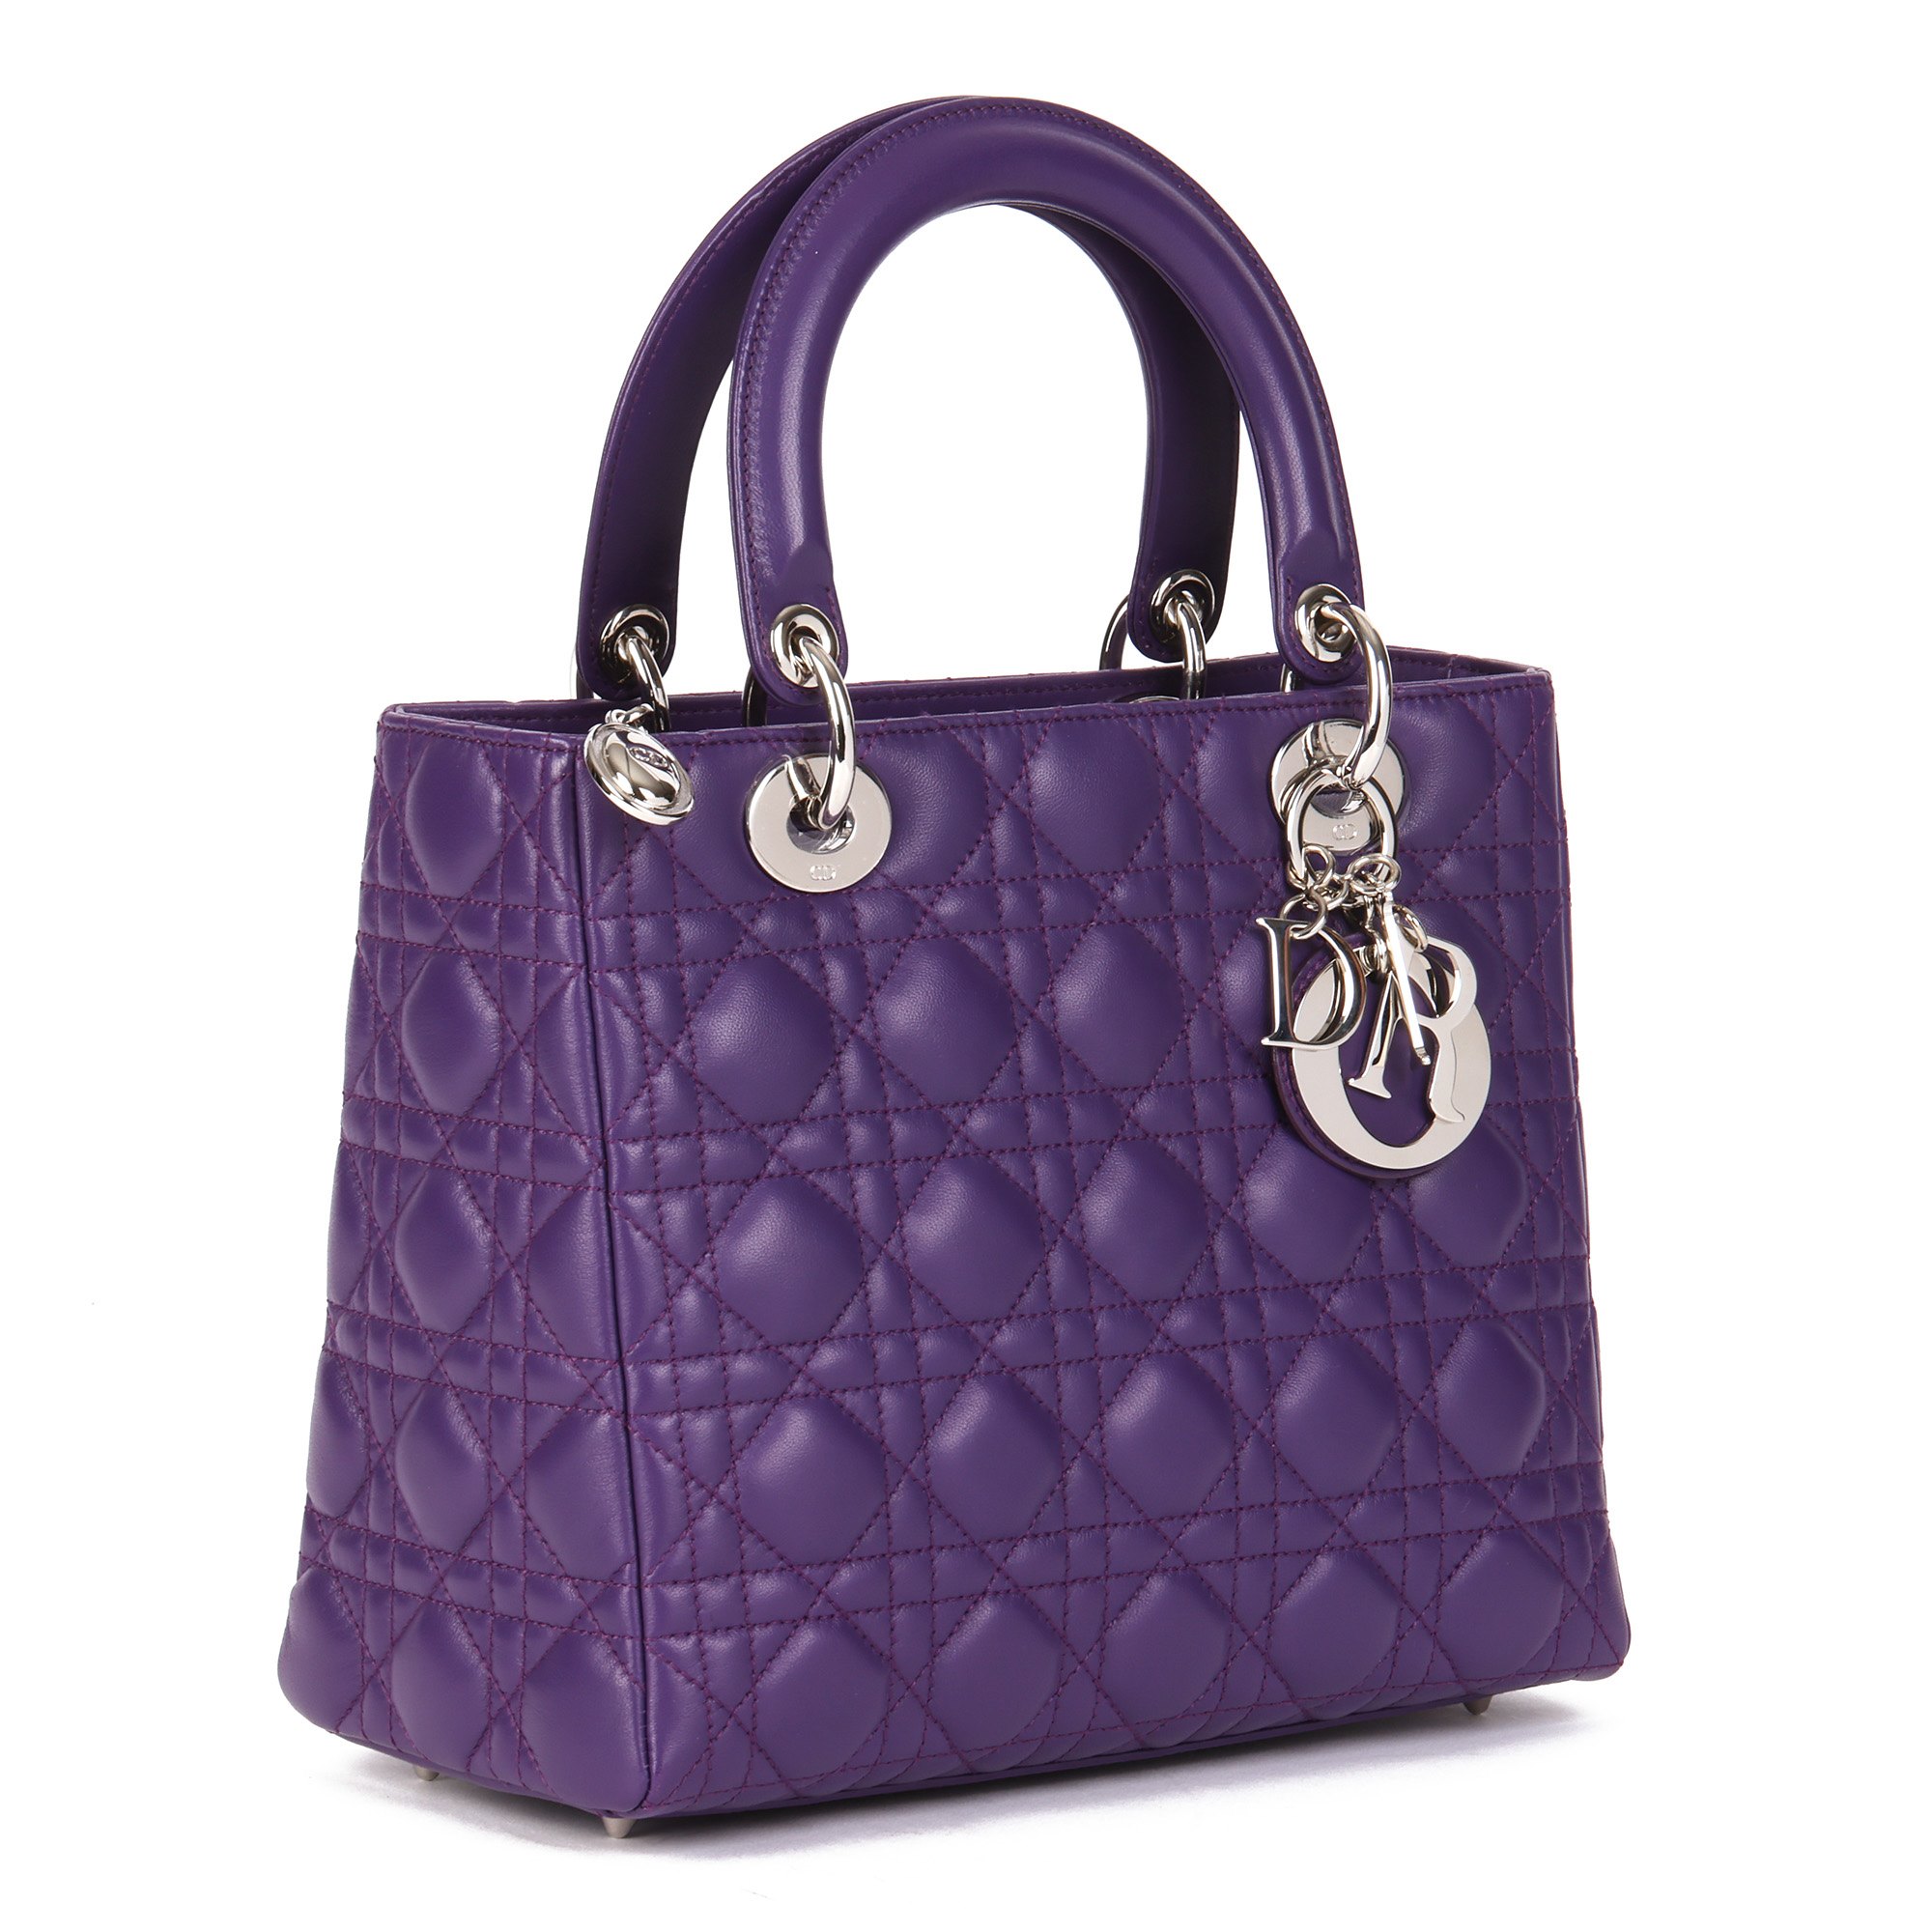 Christian Dior Violet Cannage Lambskin Leather Medium Lady Dior Bag